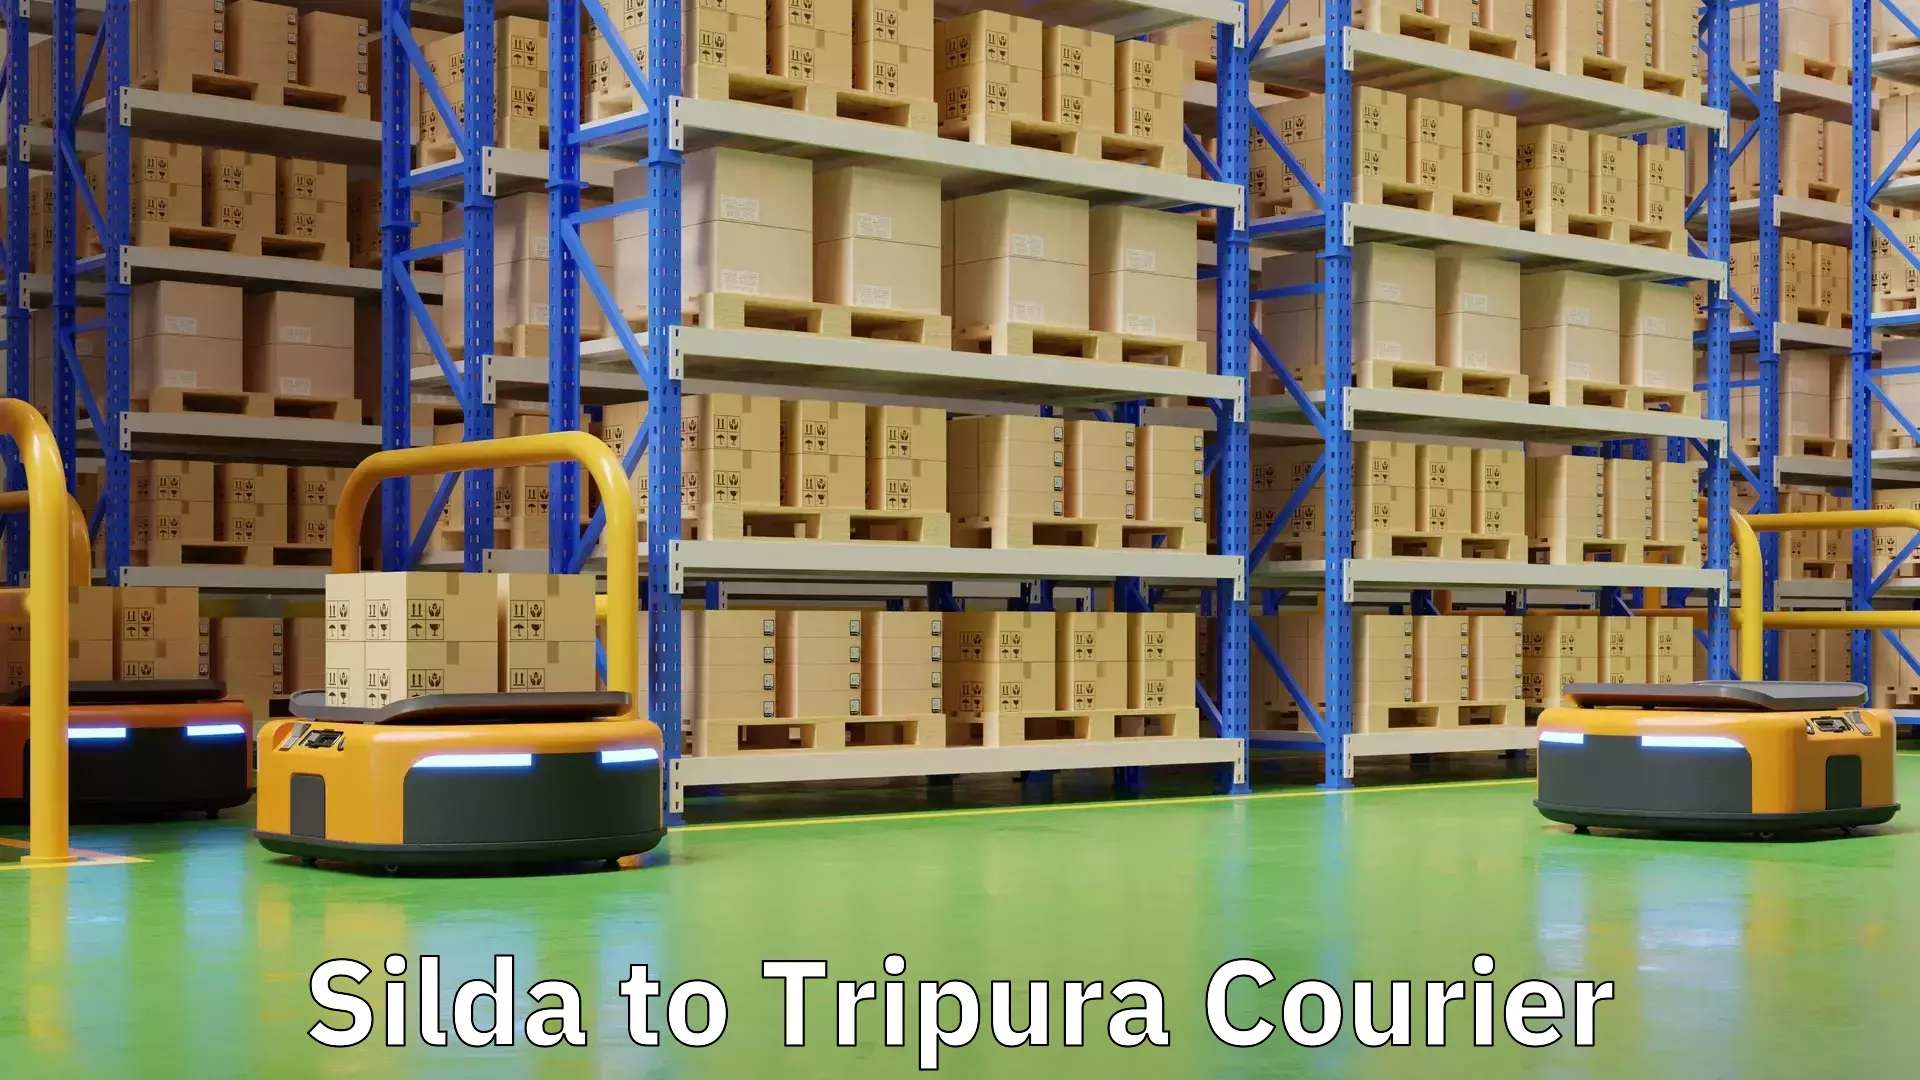 Advanced shipping technology in Silda to Tripura